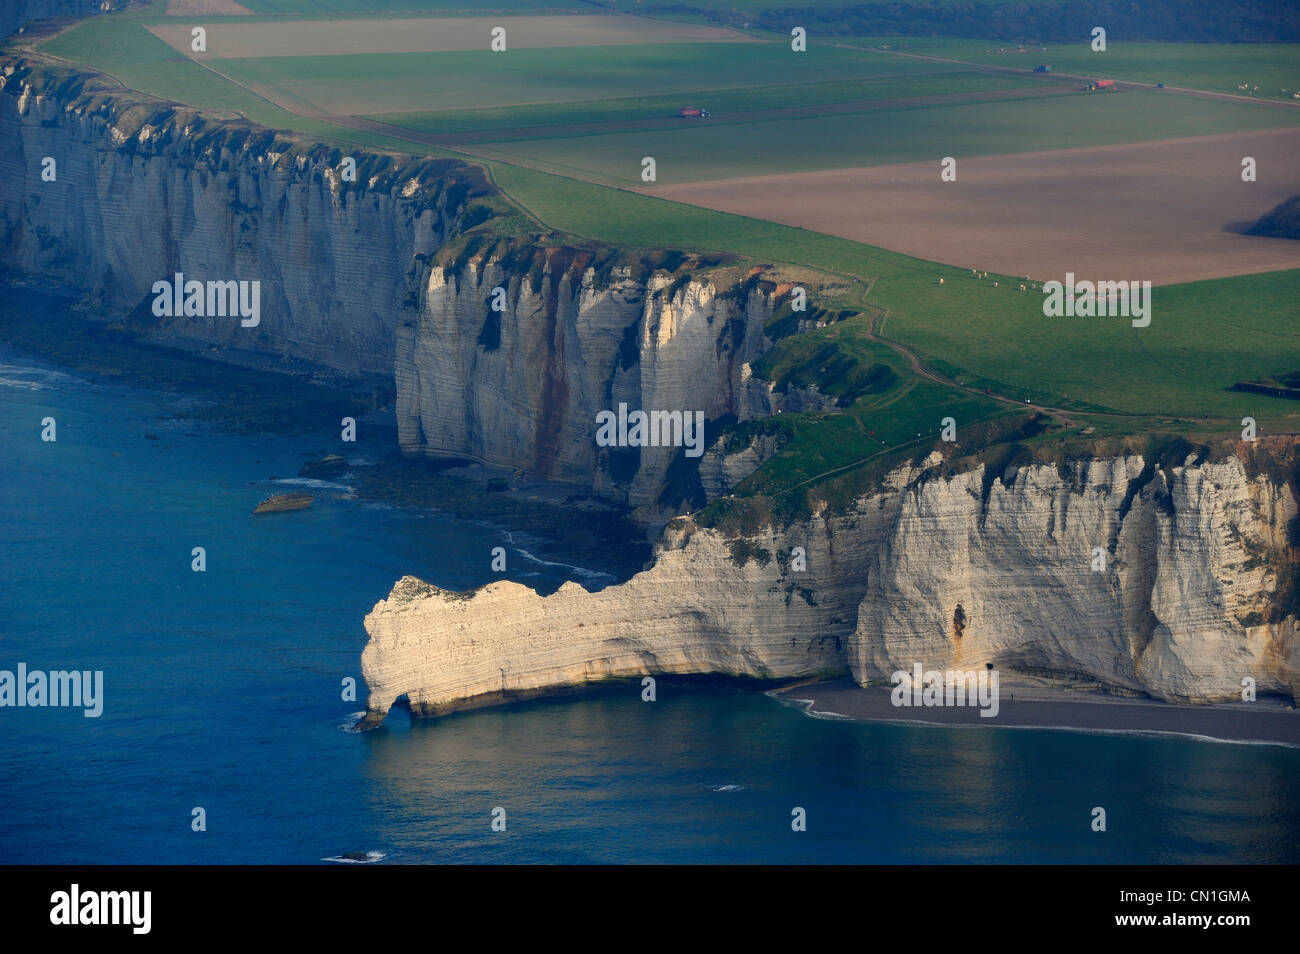 Francia, Seine Maritime, Cote d'Alabastro (costa di alabastro), Etretat, la falaise d'Amont (Amont Cliff) (vista aerea) Foto Stock